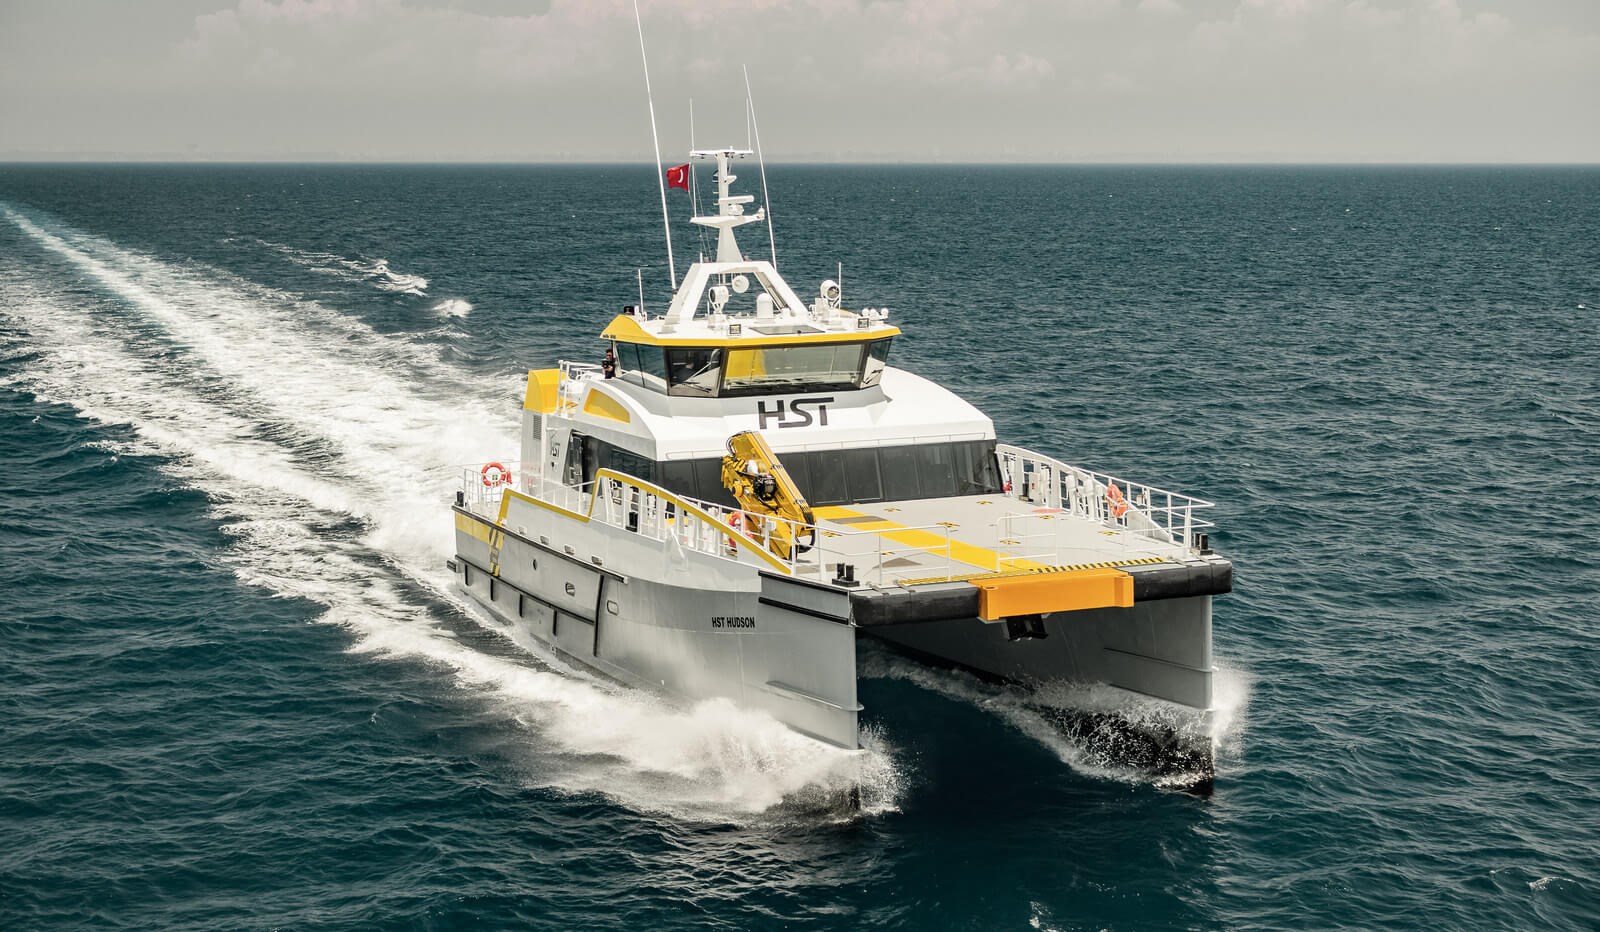 Damen Shipyards delivers its latest vessel to Rederij Groen